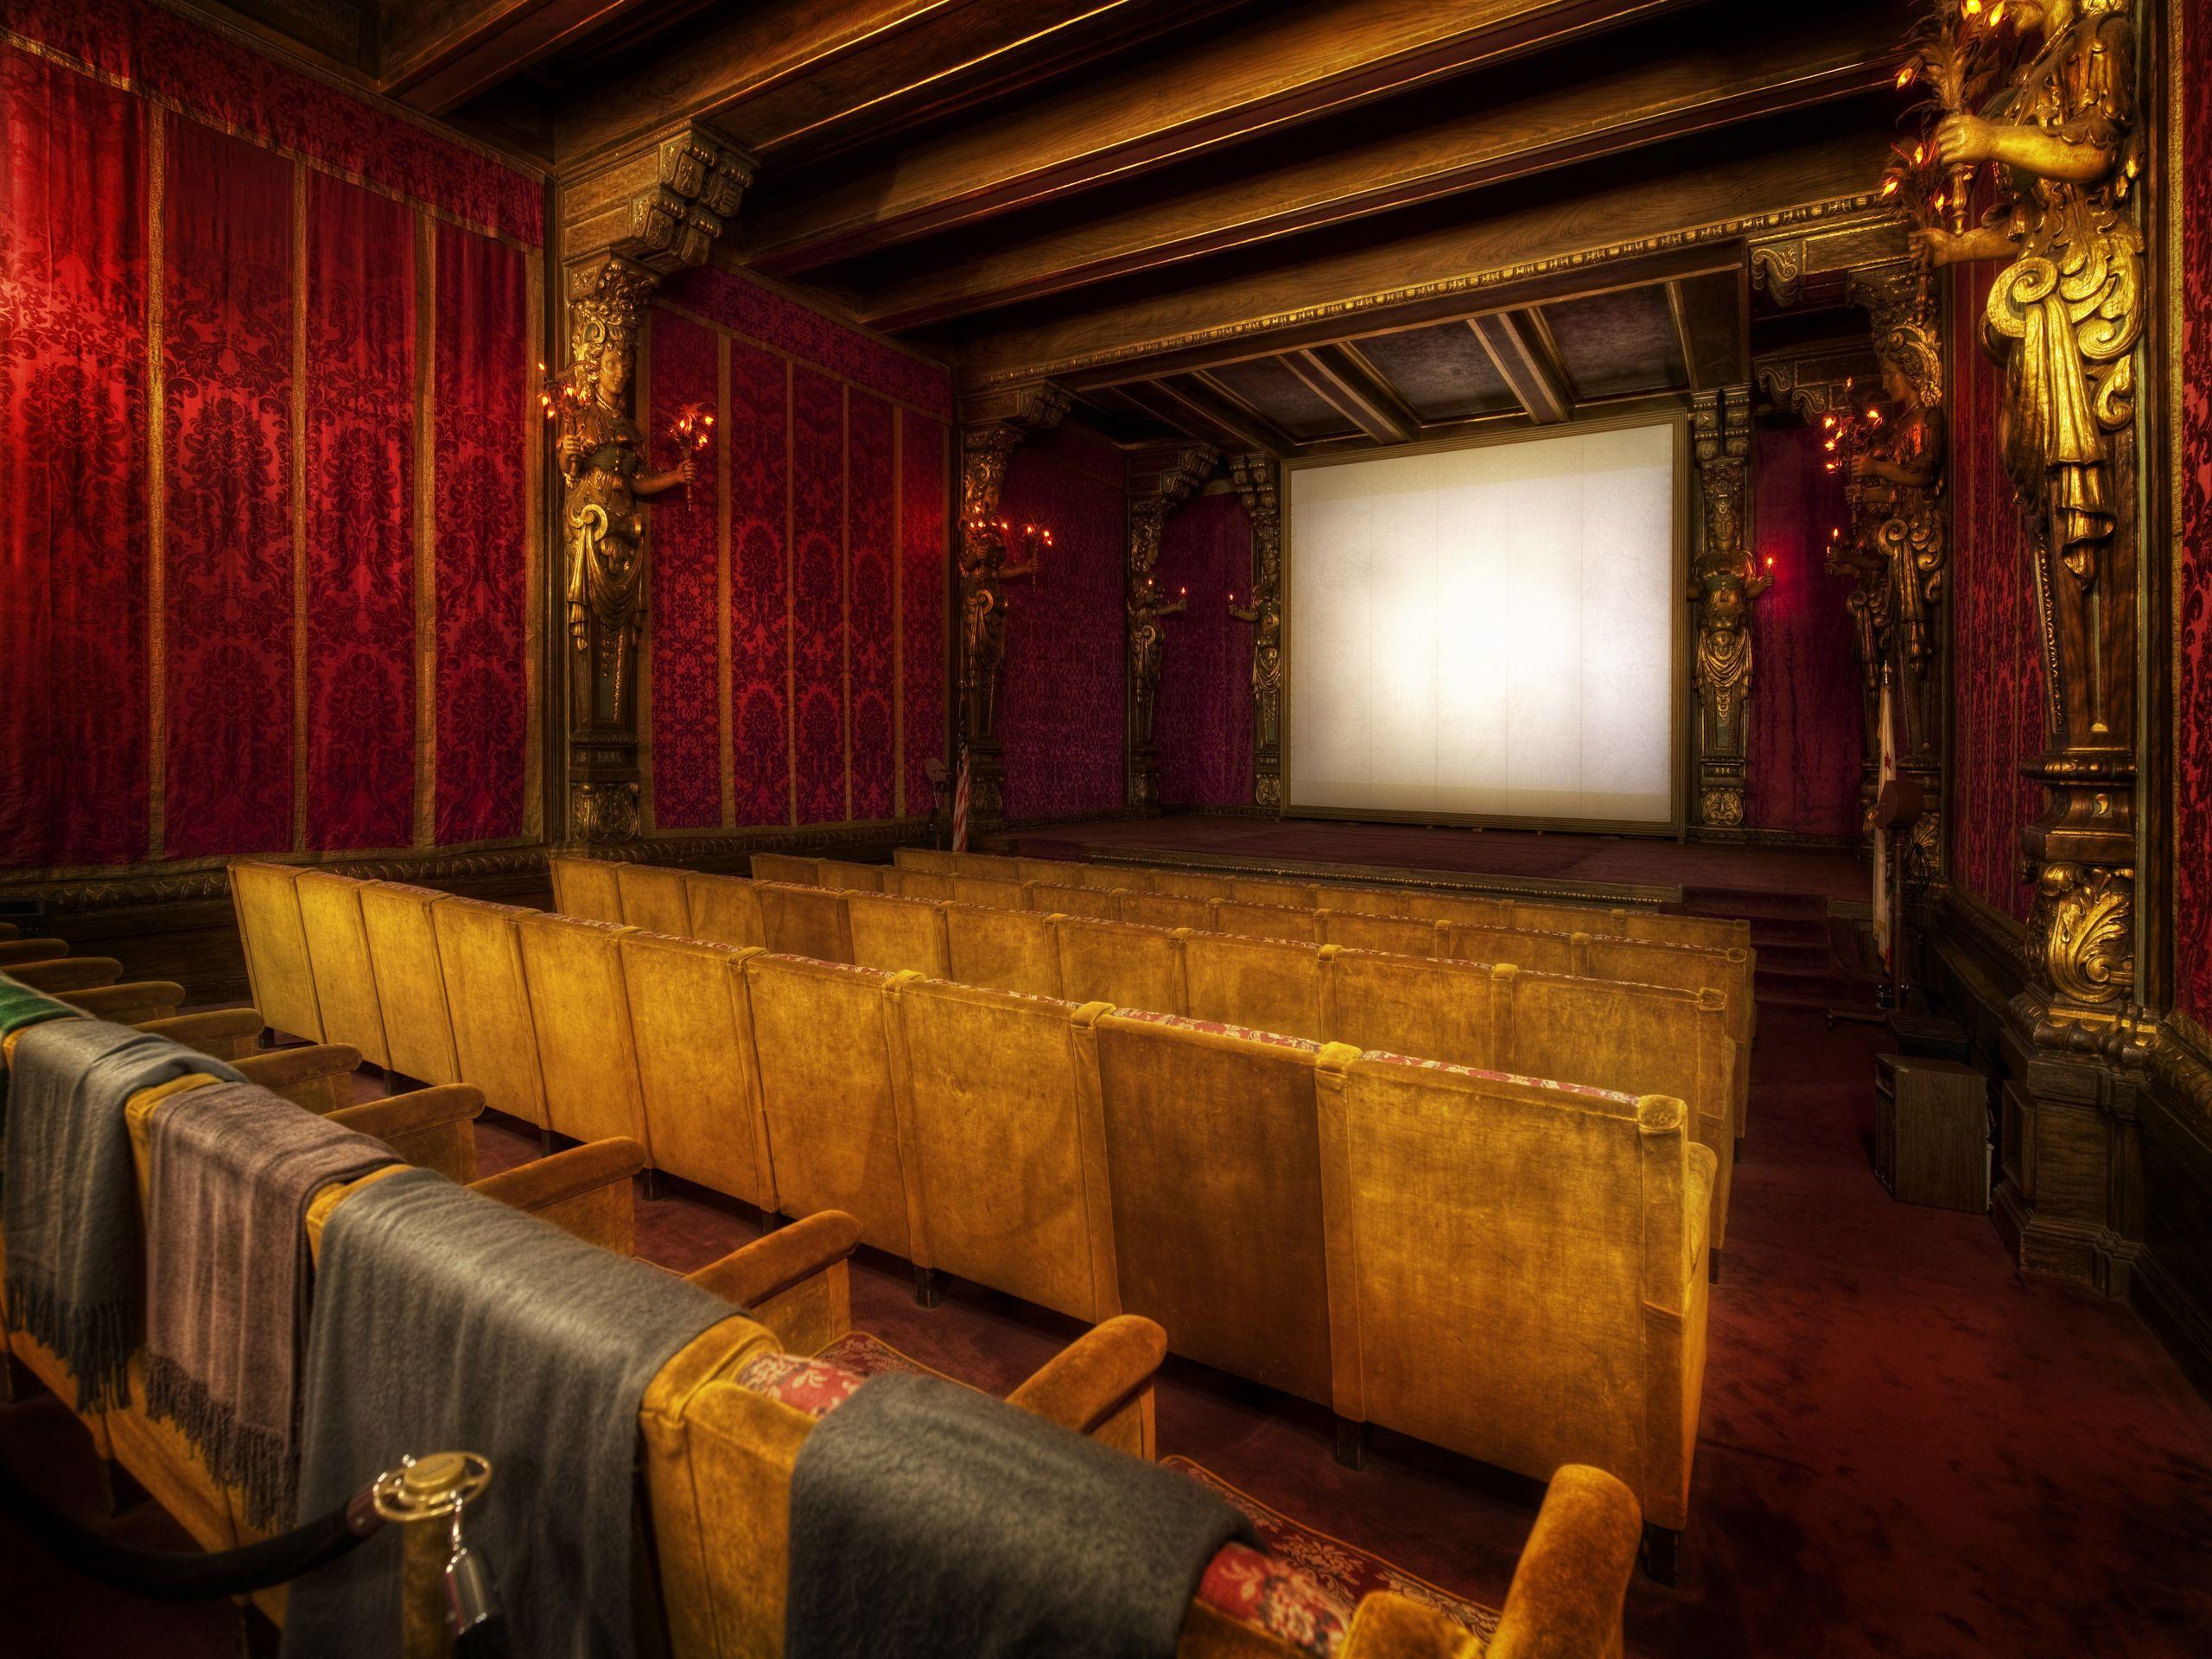 Theatre room. Hearst Castle интерьер. Интерьер театра. Старинный зал. Театральный стиль в интерьере.